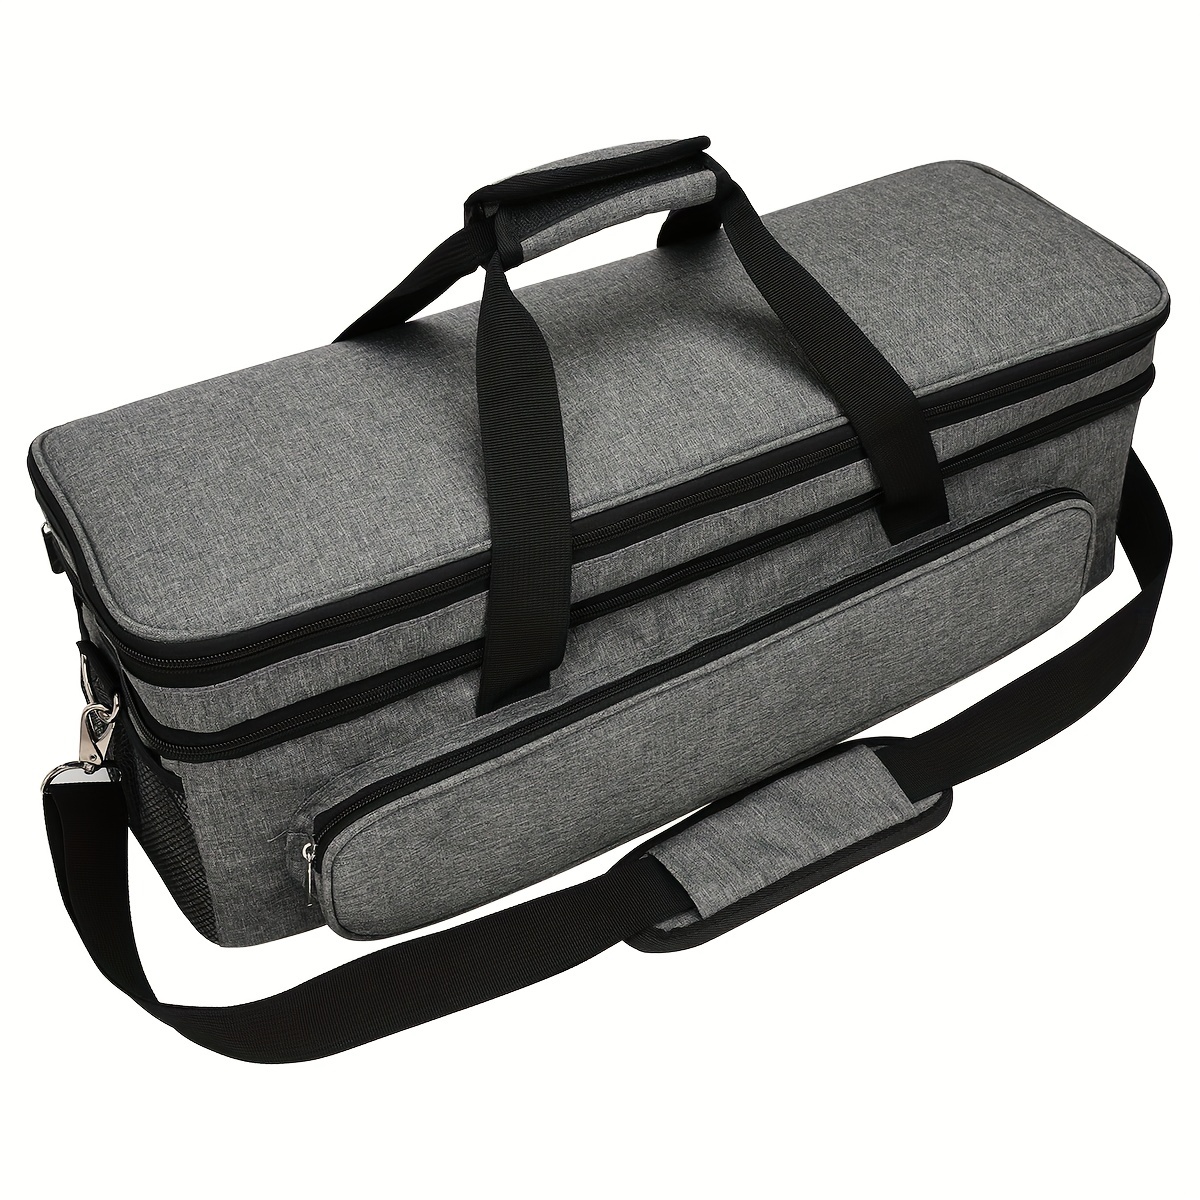 New Carrying Case Compatible With Cricut Maker 3, Cricut Explore 3